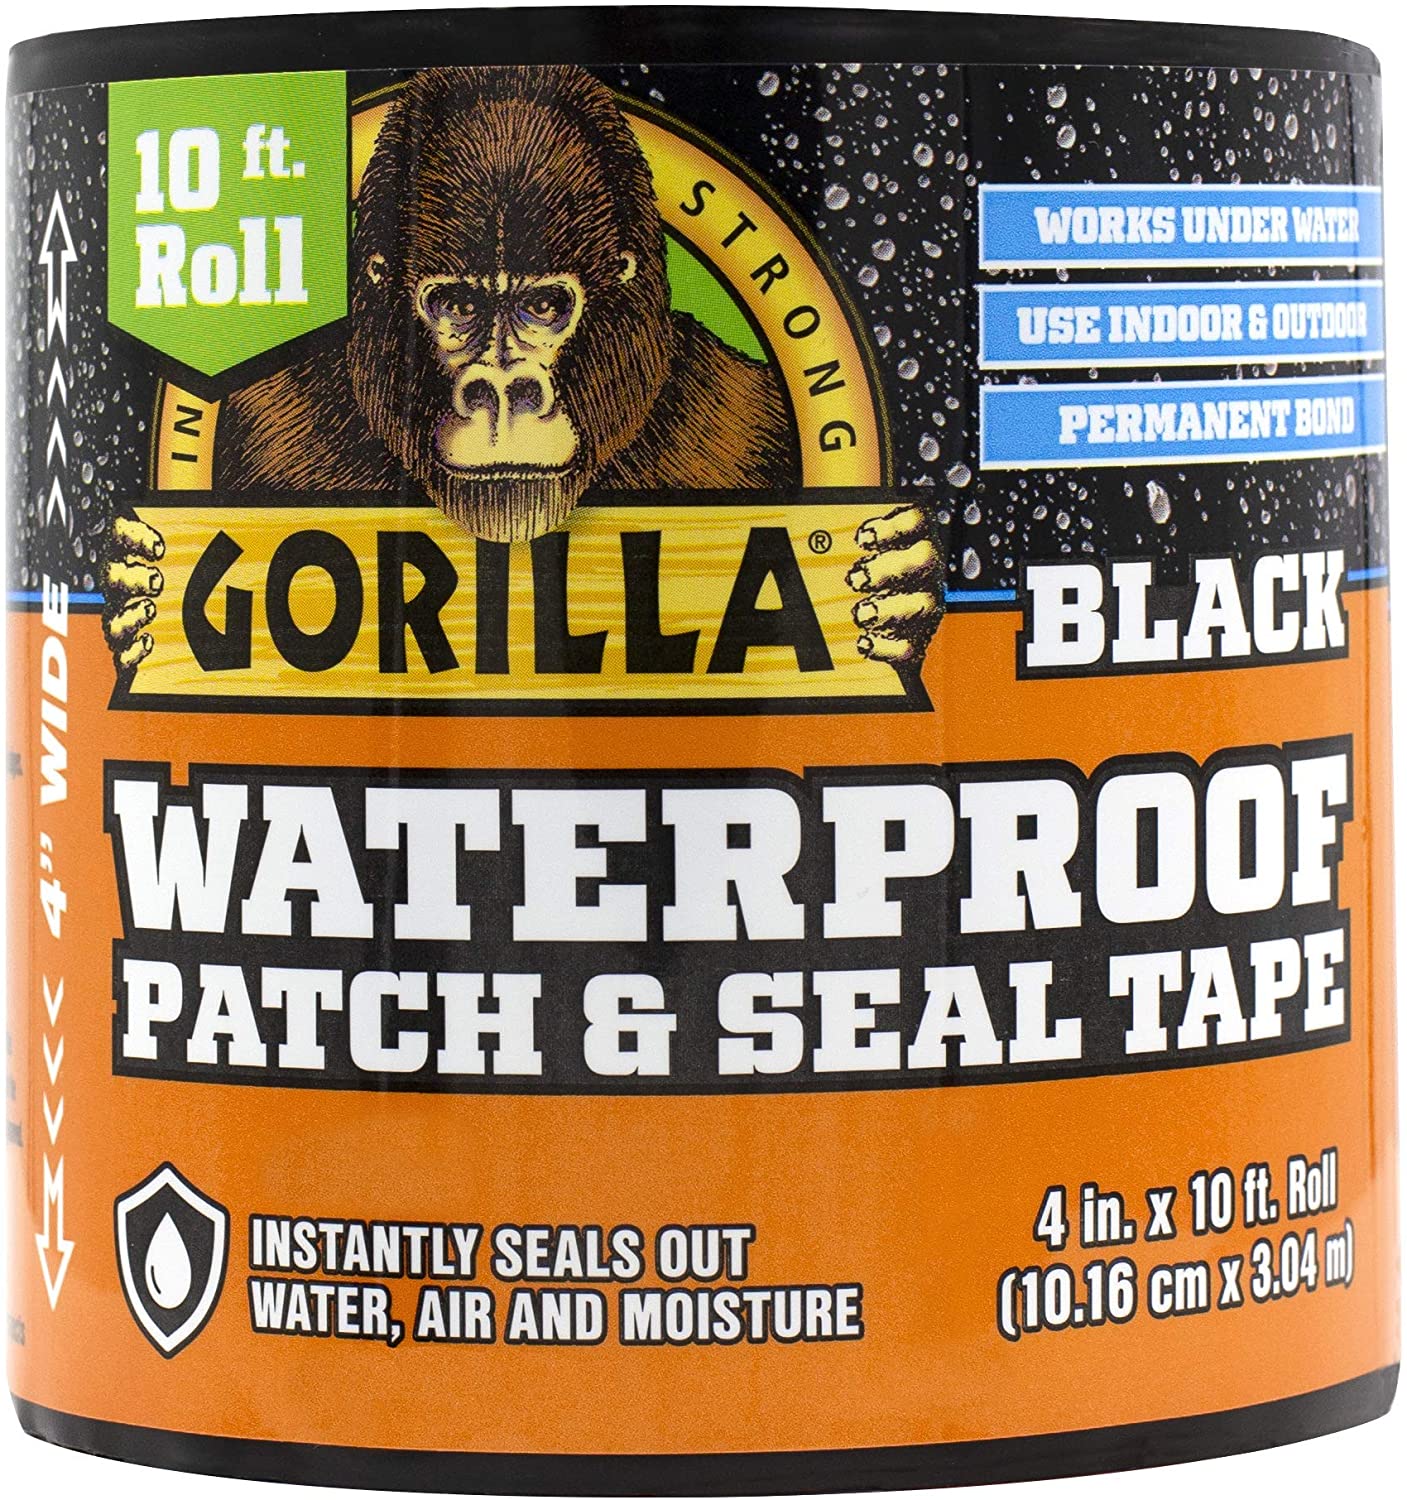 Gorilla Waterproof Patch & Seal Tape, 3.04 x 0.1 m, Black/White/Clear